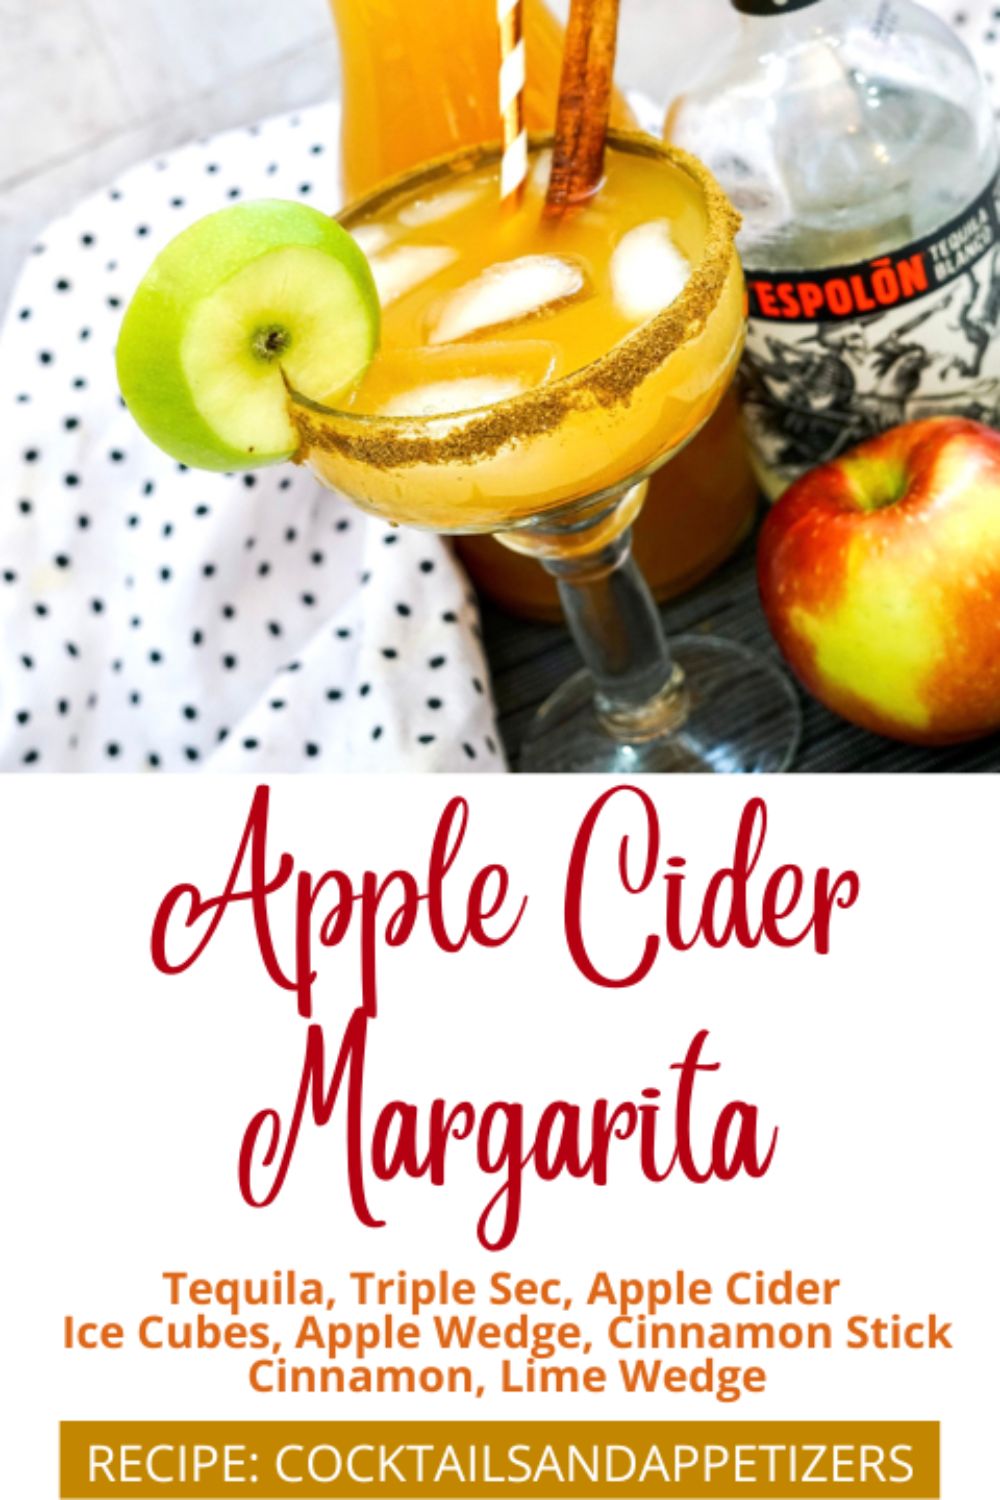 Apple Cider Margarita with an apple slice garnish